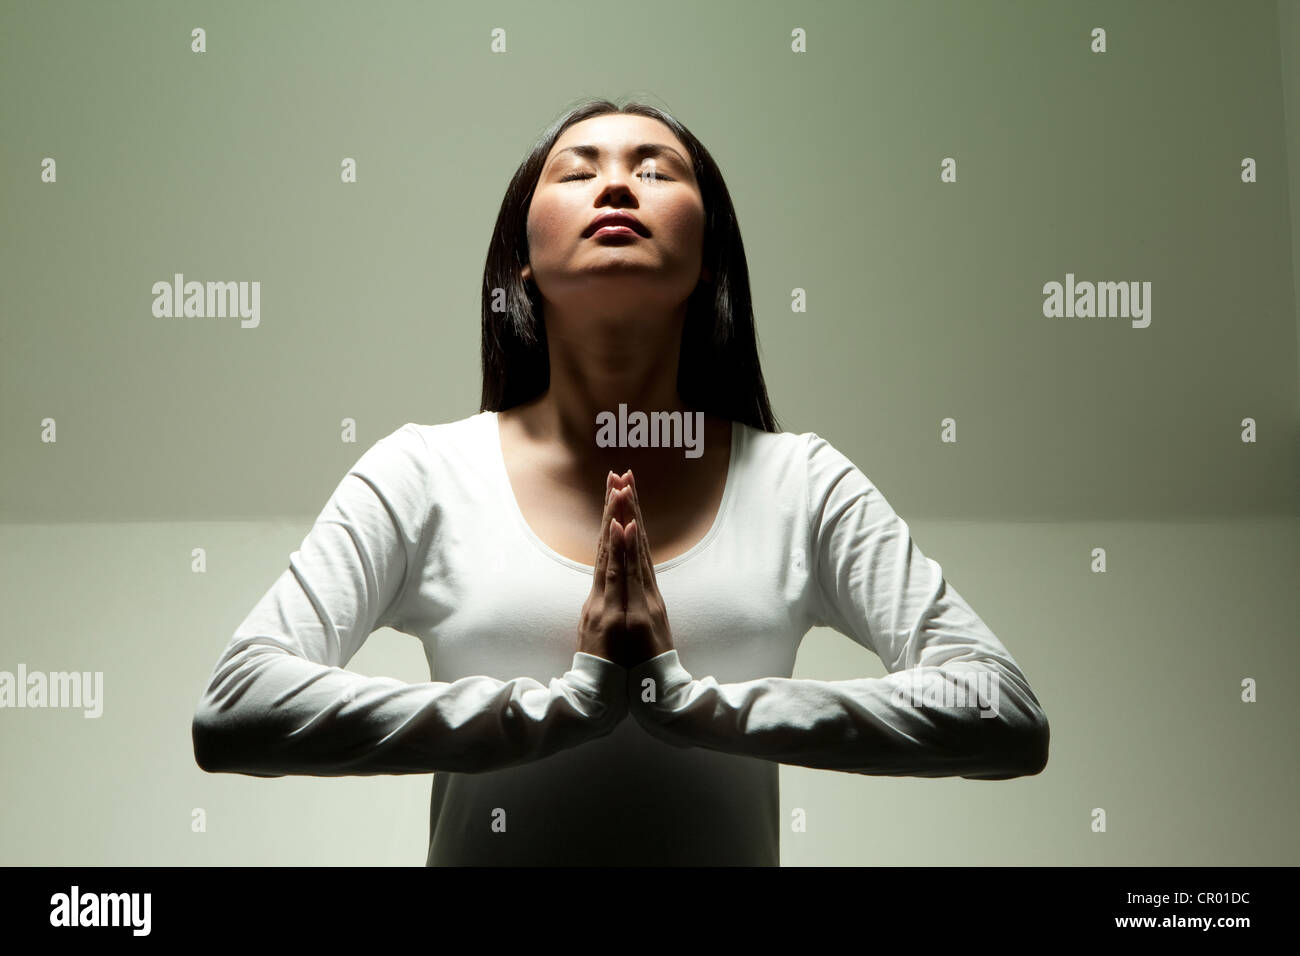 Woman meditating under spotlight Stock Photo